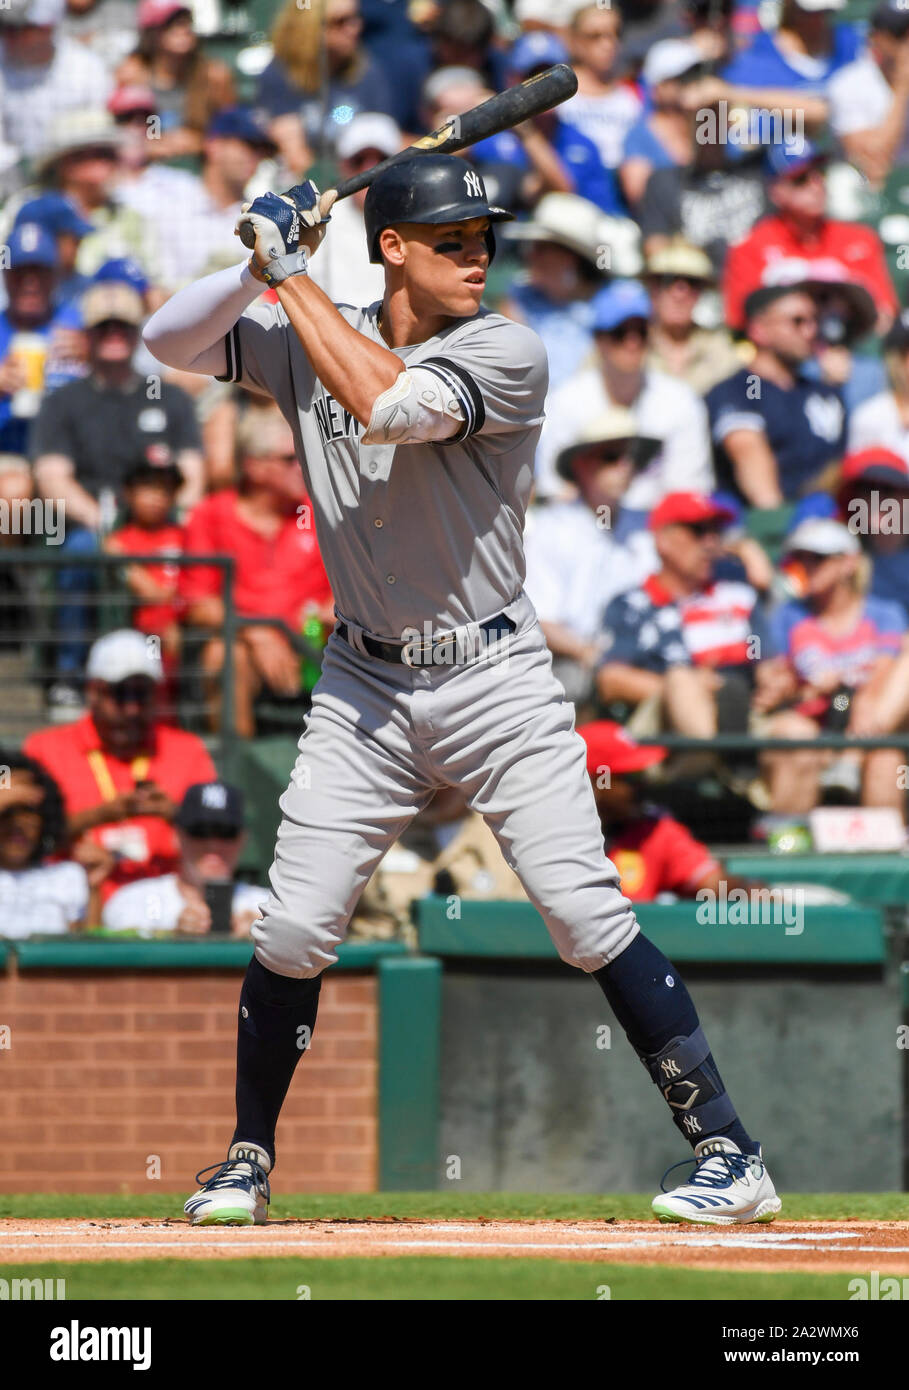 September 29, 2019: New York Yankees right fielder Aaron Judge #99